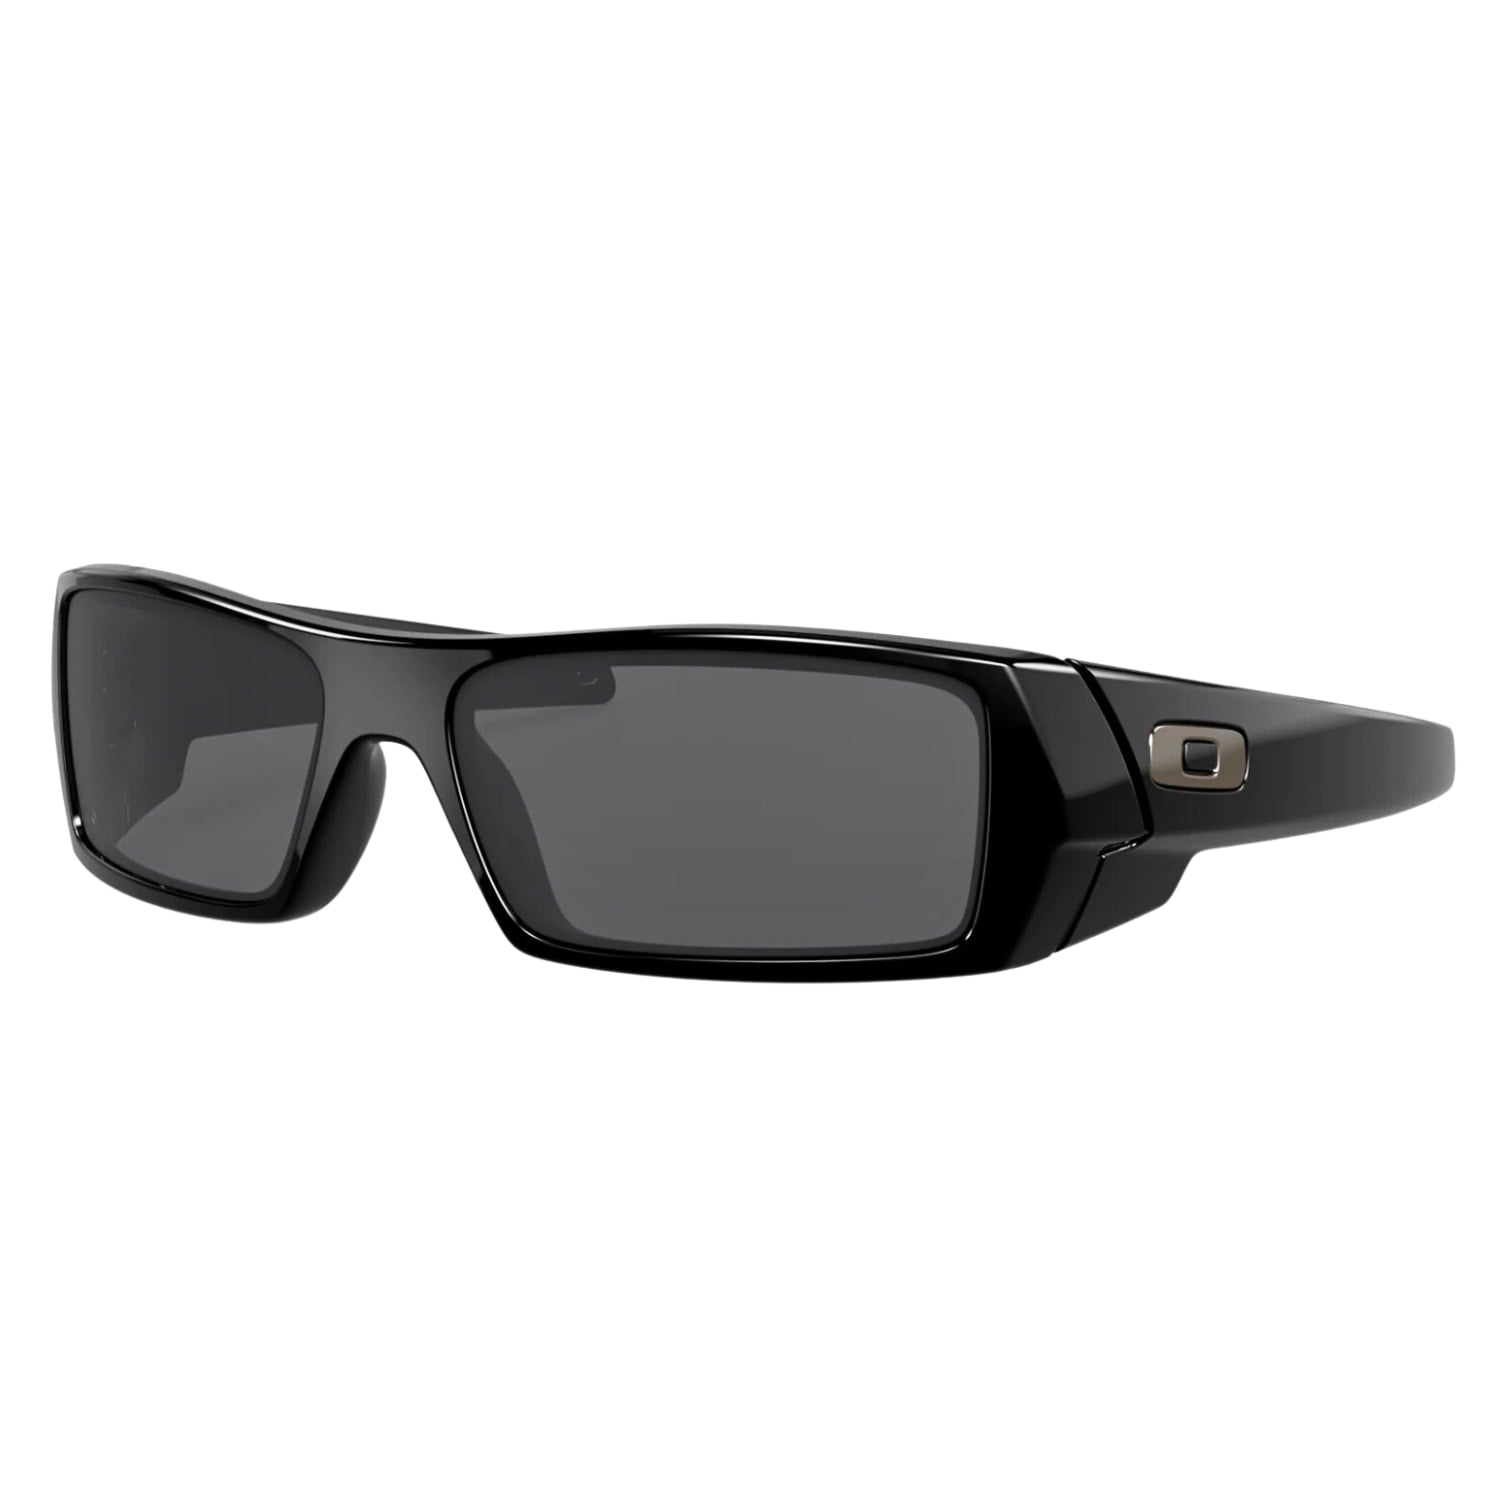 Oakley Gascan Sunglasses - Polished Black/Grey - Wrap Around Sunglasses by Oakley